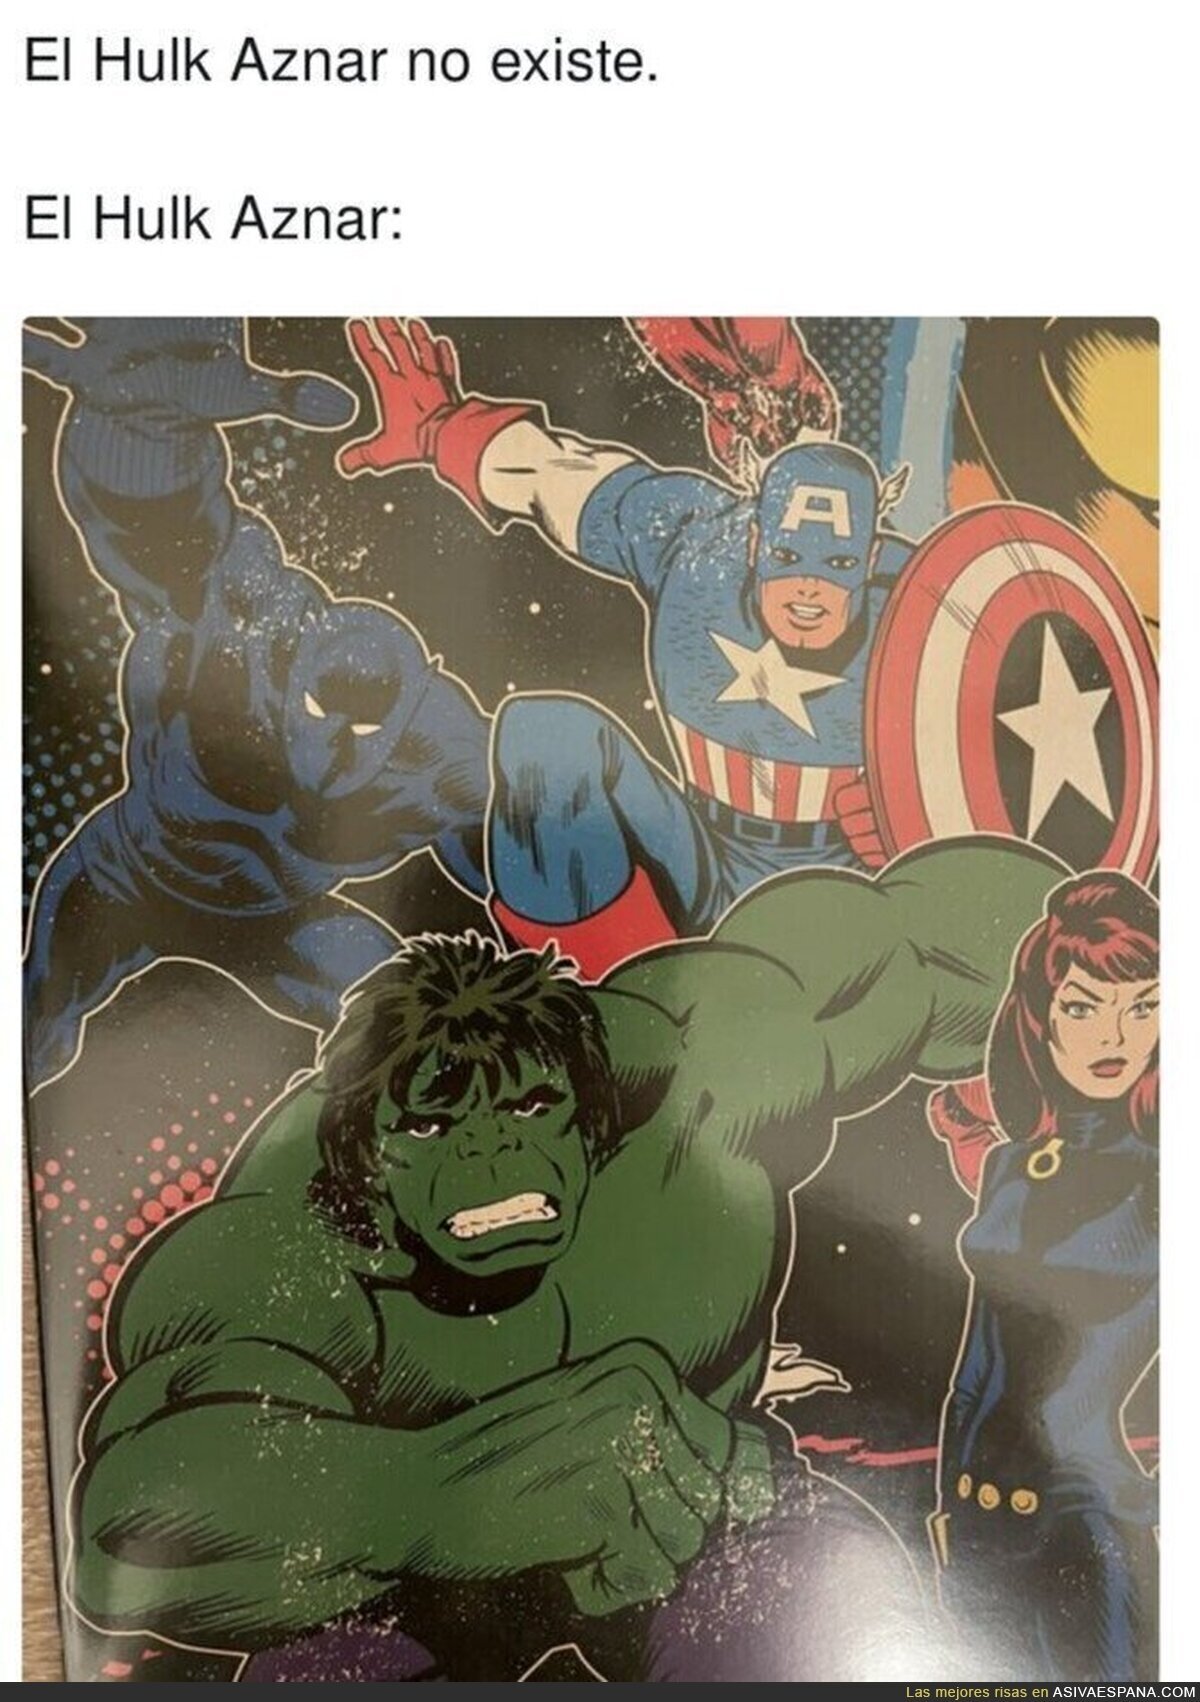 No volveré a ver a Hulk de la misma forma